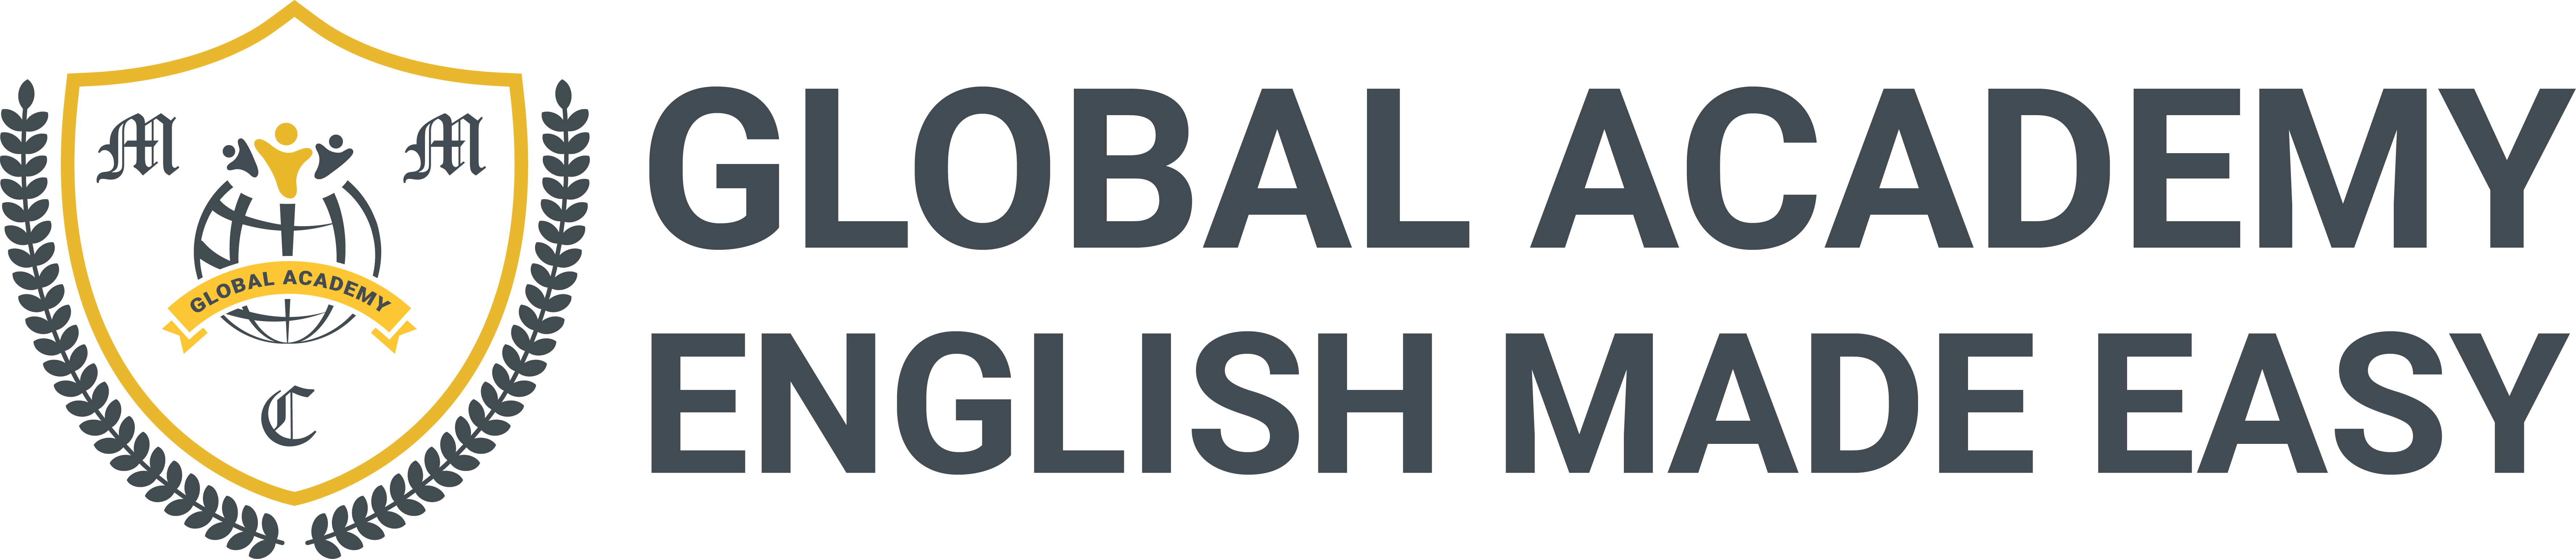 MCM Global Academy